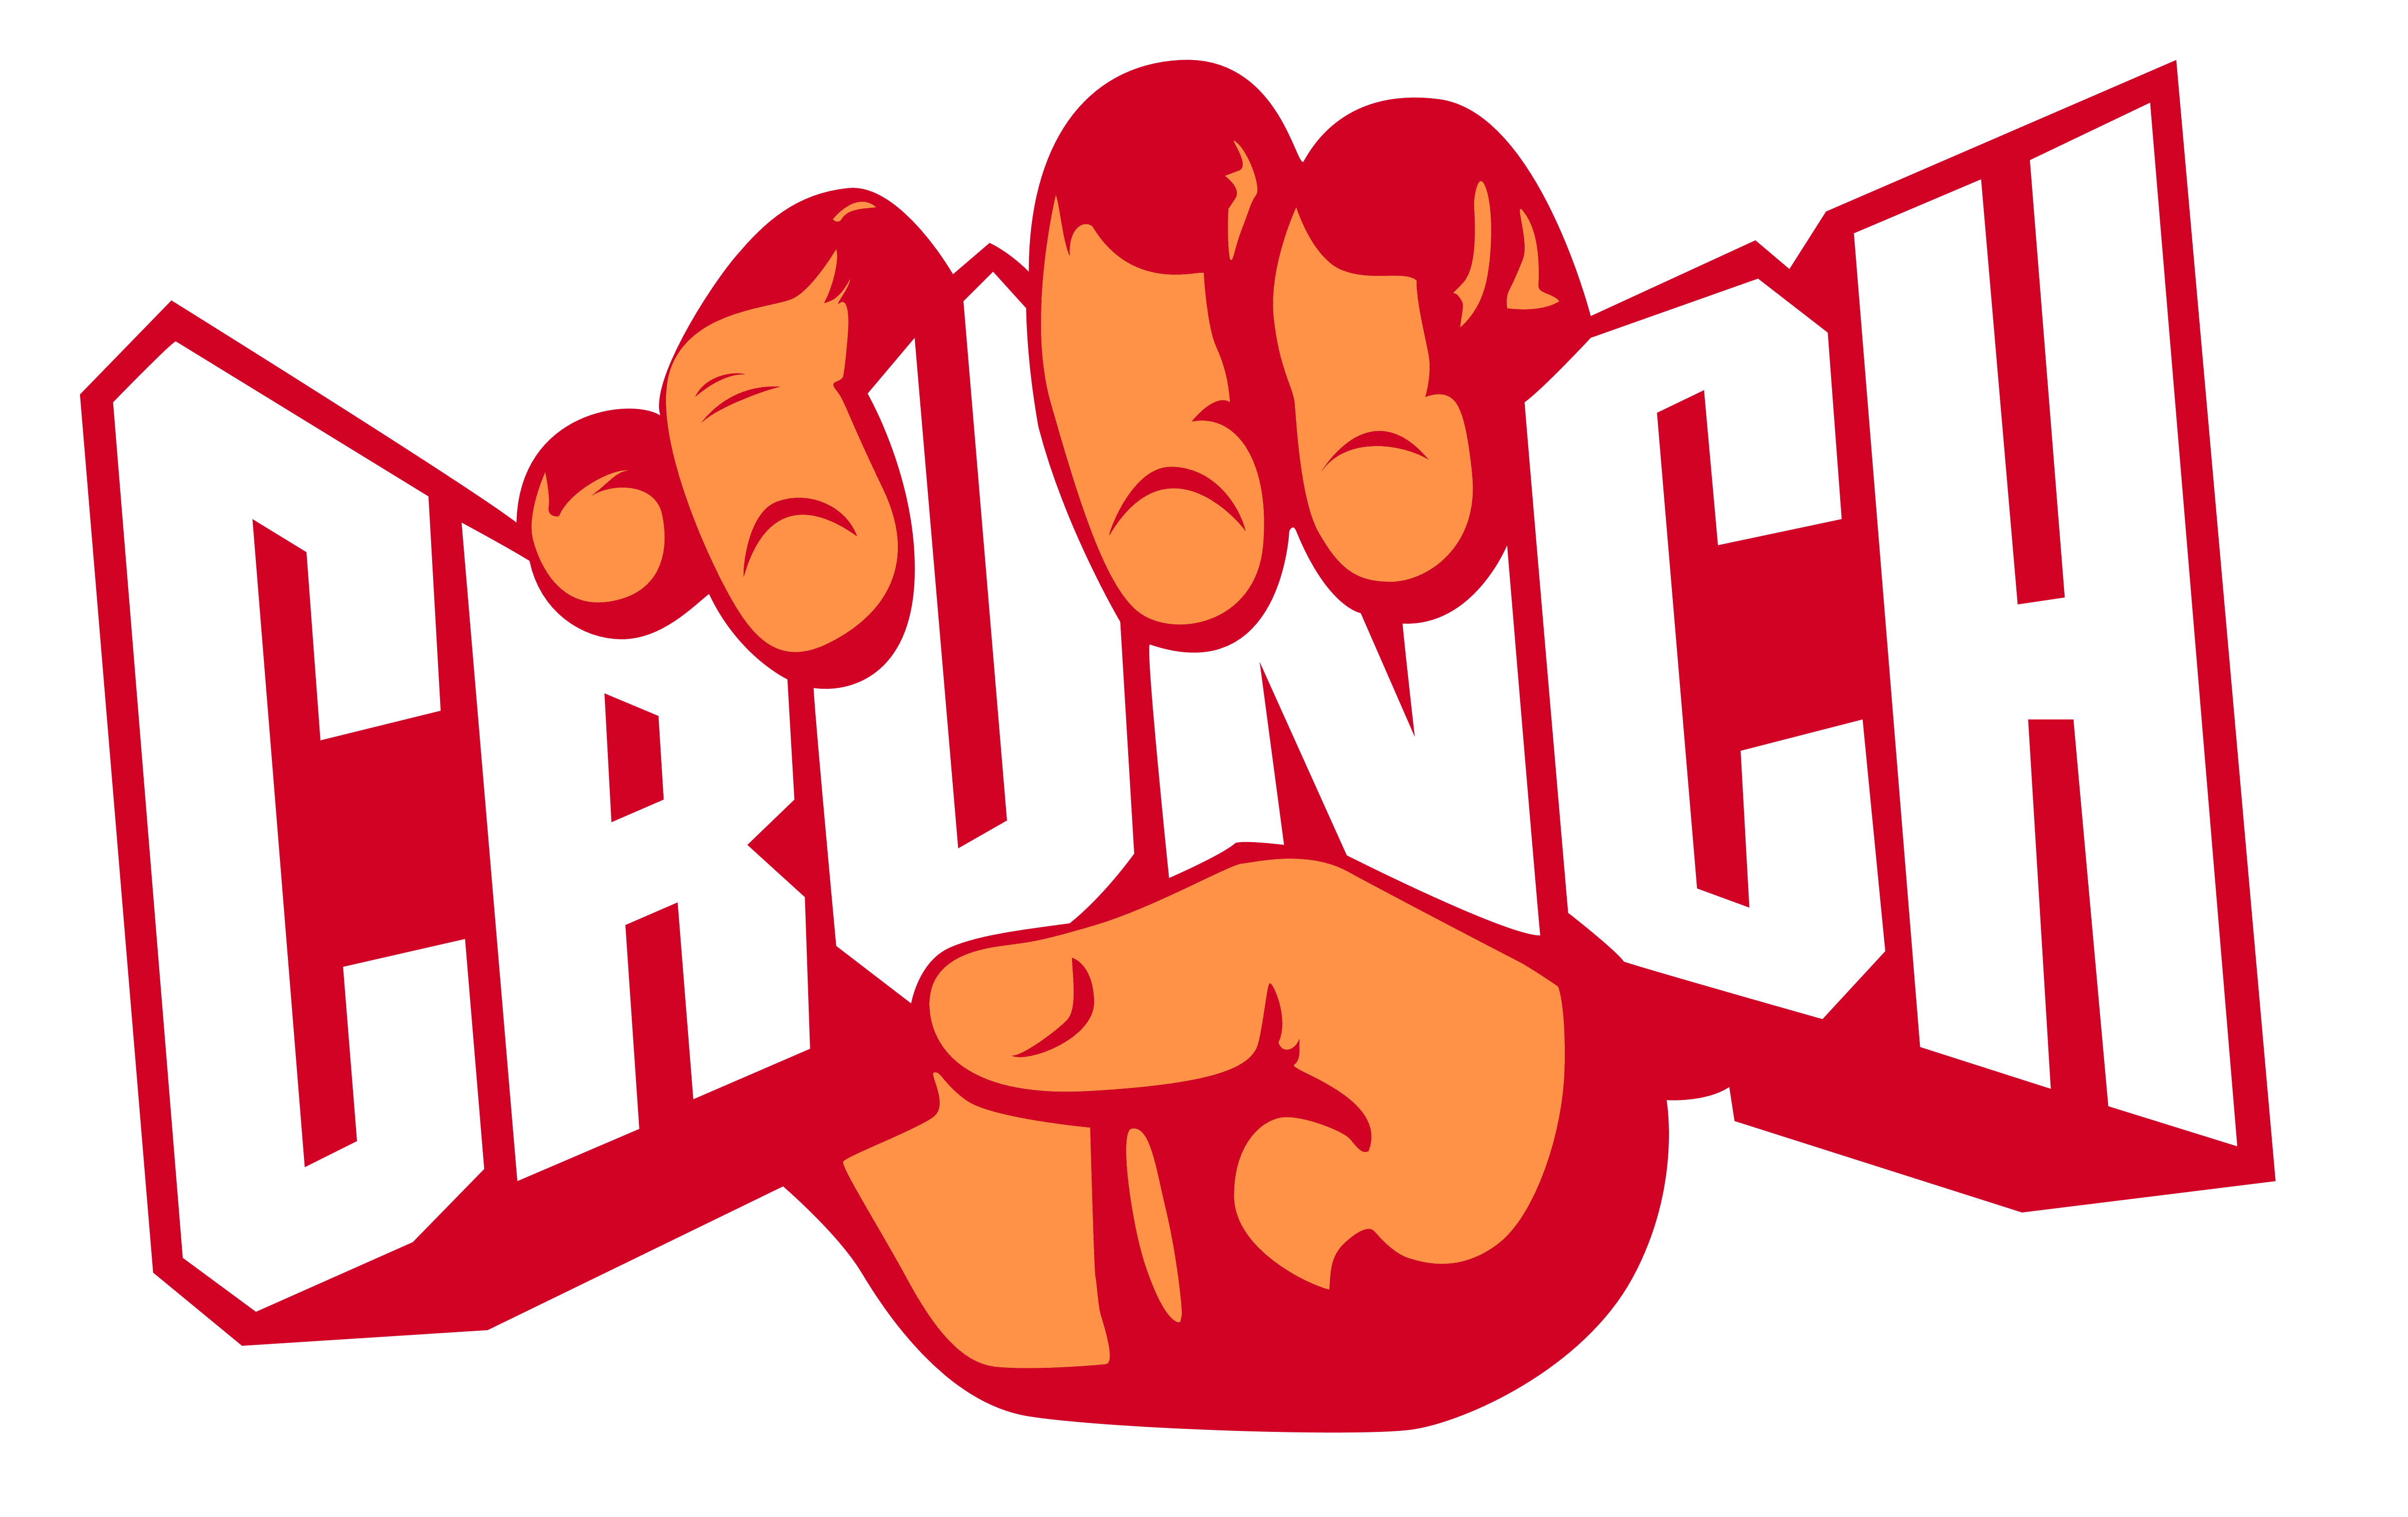 Crunch